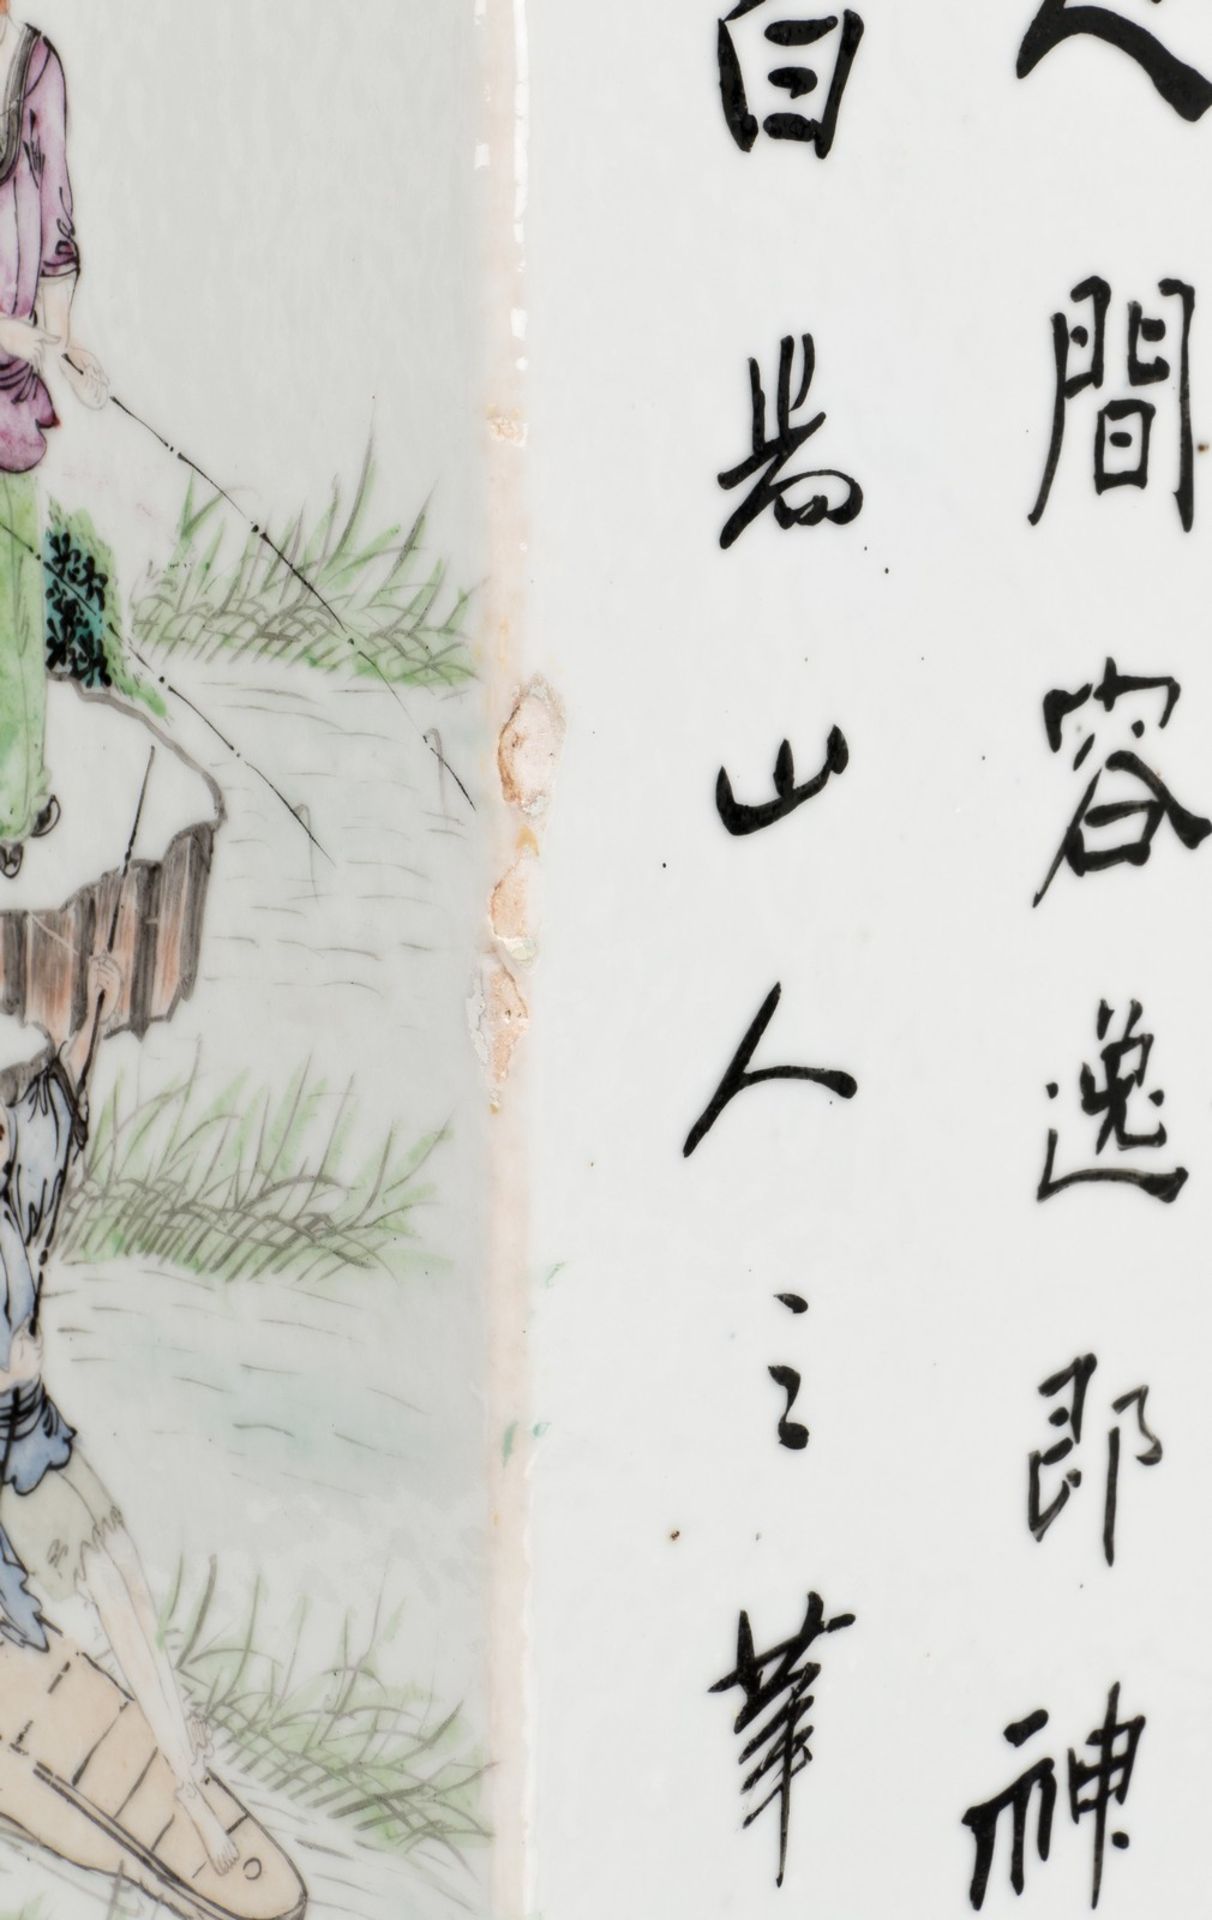 Two quadrangular vases, China, polychrome decorated with fishermen, literati and calligraphic texts, - Image 13 of 18